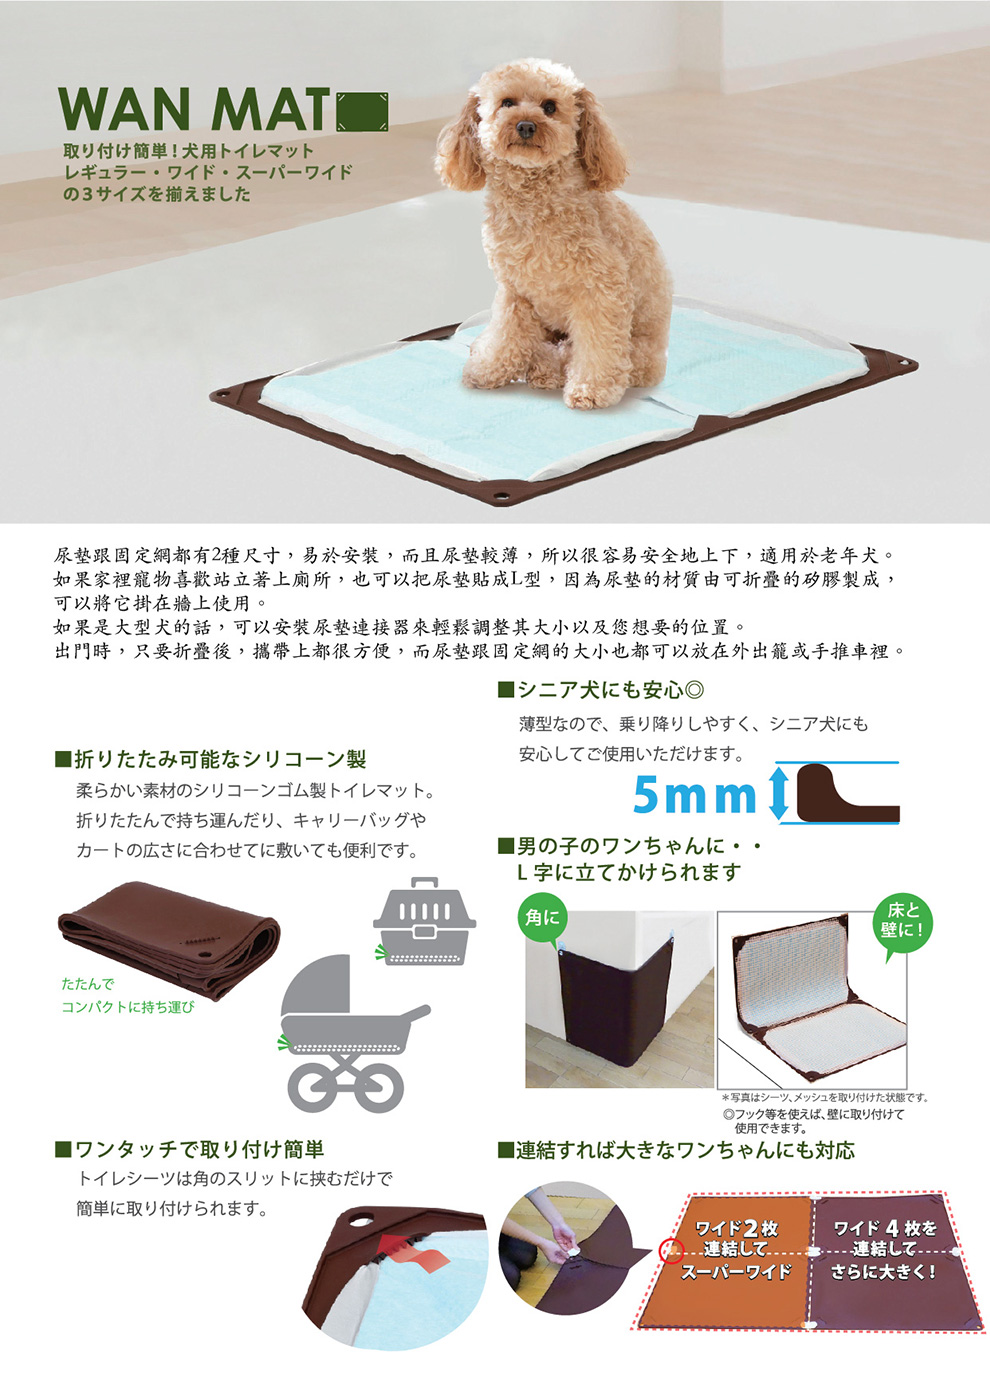 HARIO, Pet goods, Made in Japan, Dog, MAN MAT